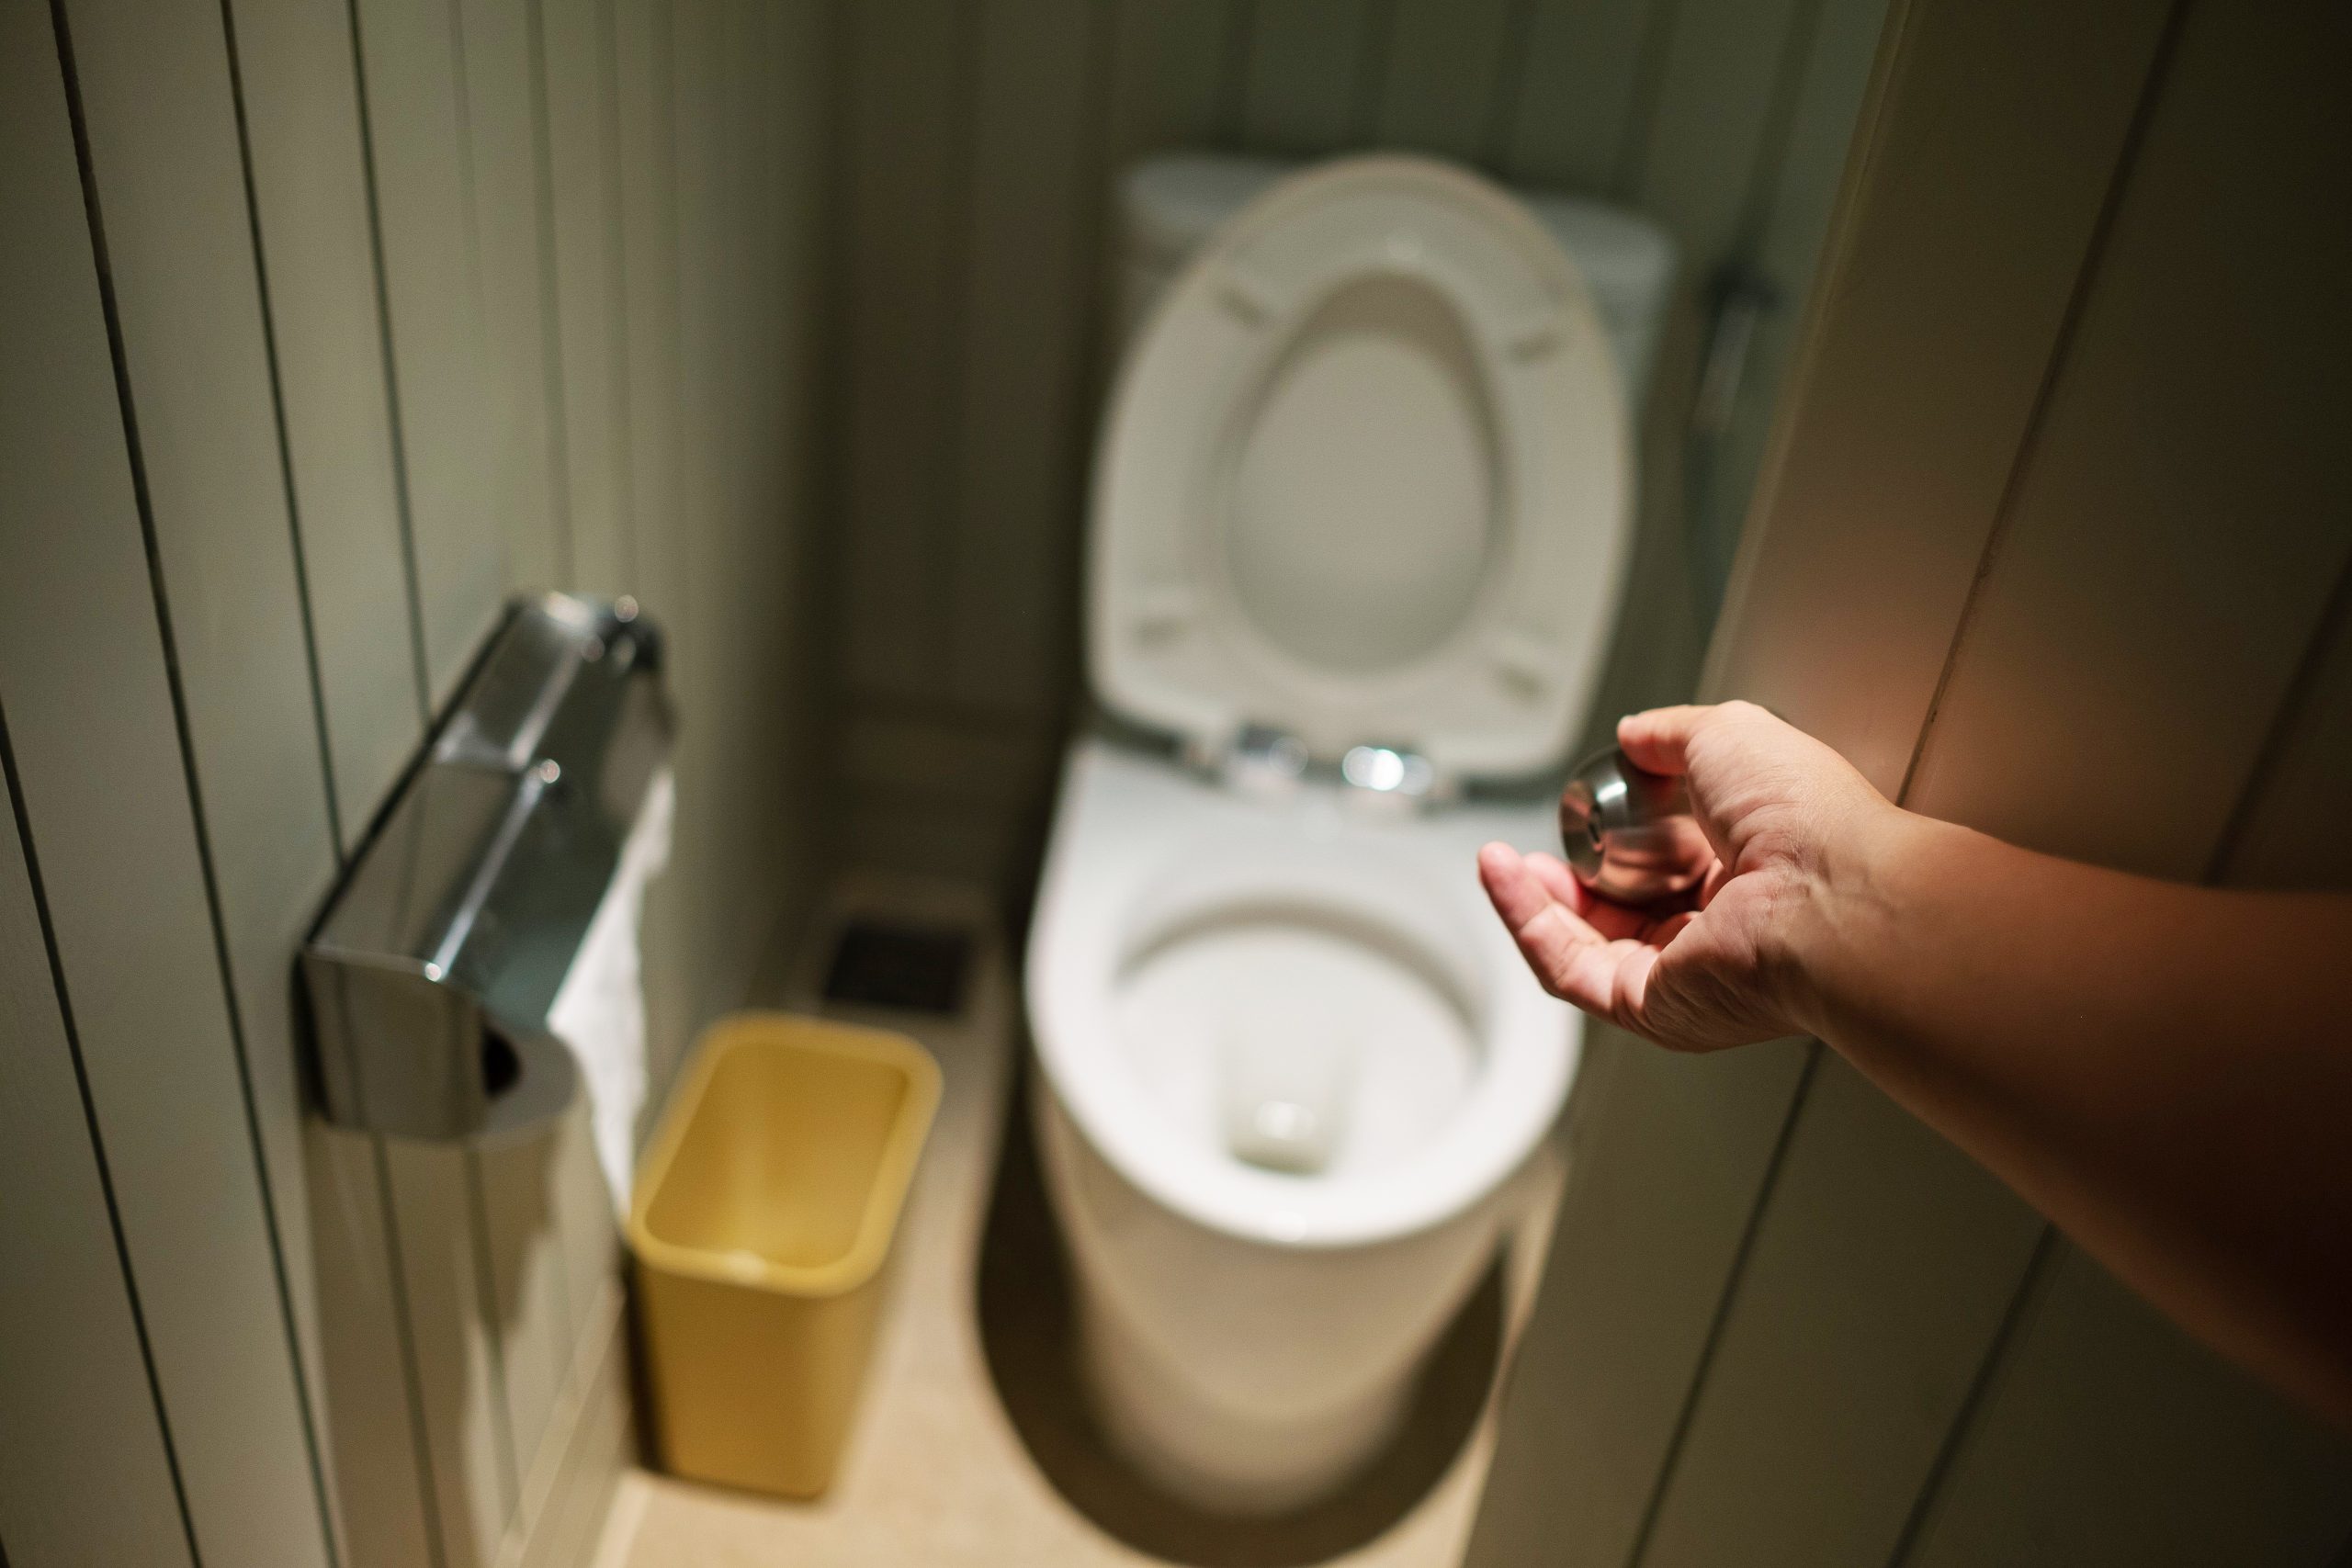 https://www.neozone.org/blog/wp-content/uploads/2022/12/invention-innovation-toilette-baisse-automatique-002-scaled.jpg